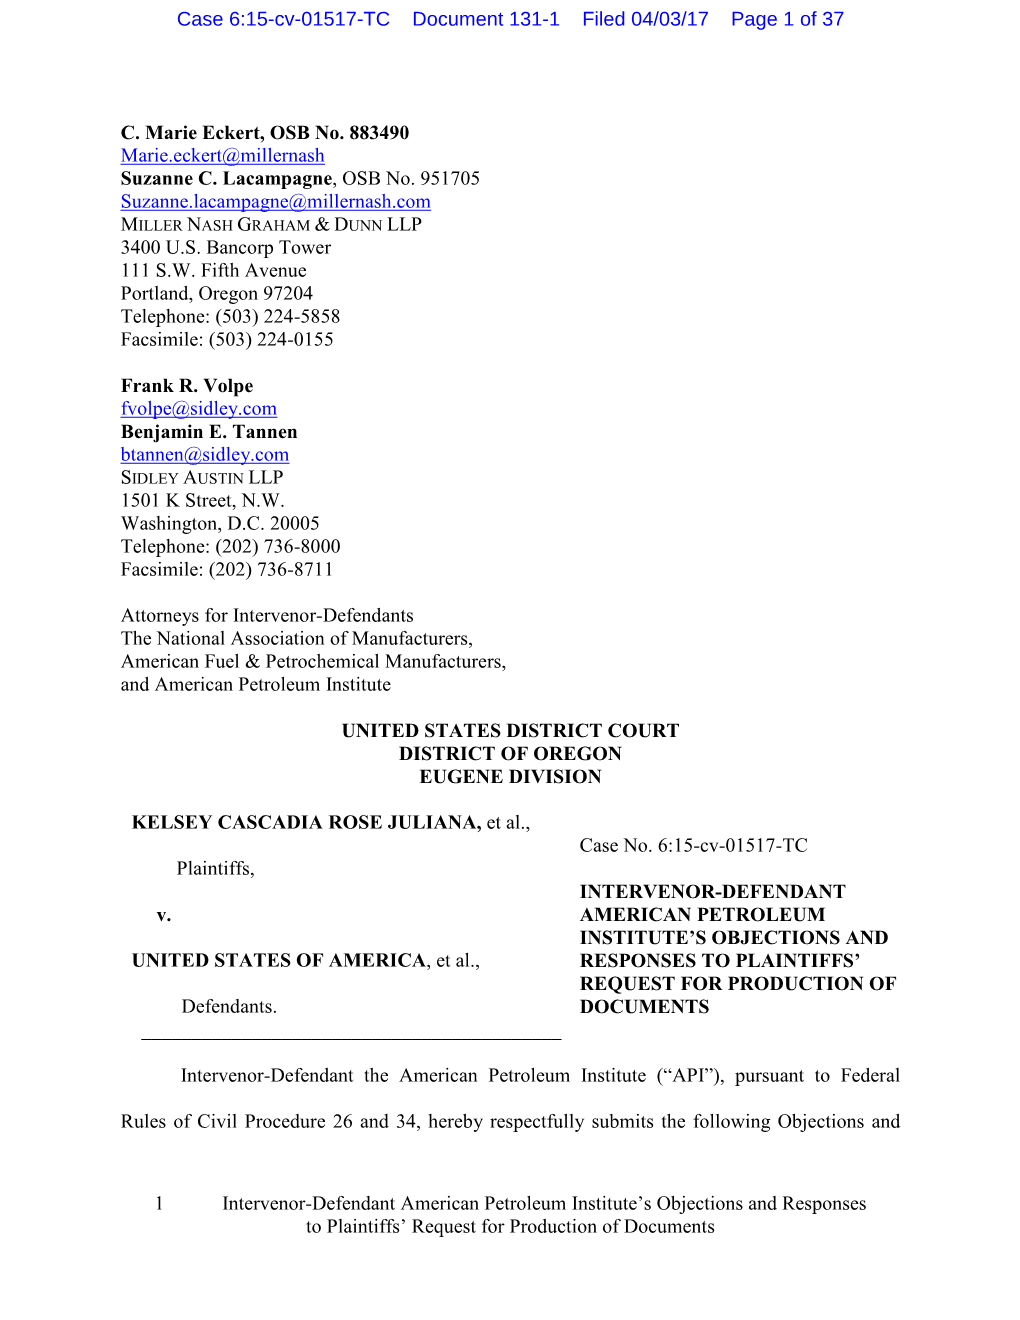 1 Intervenor-Defendant American Petroleum Institute's Objections And